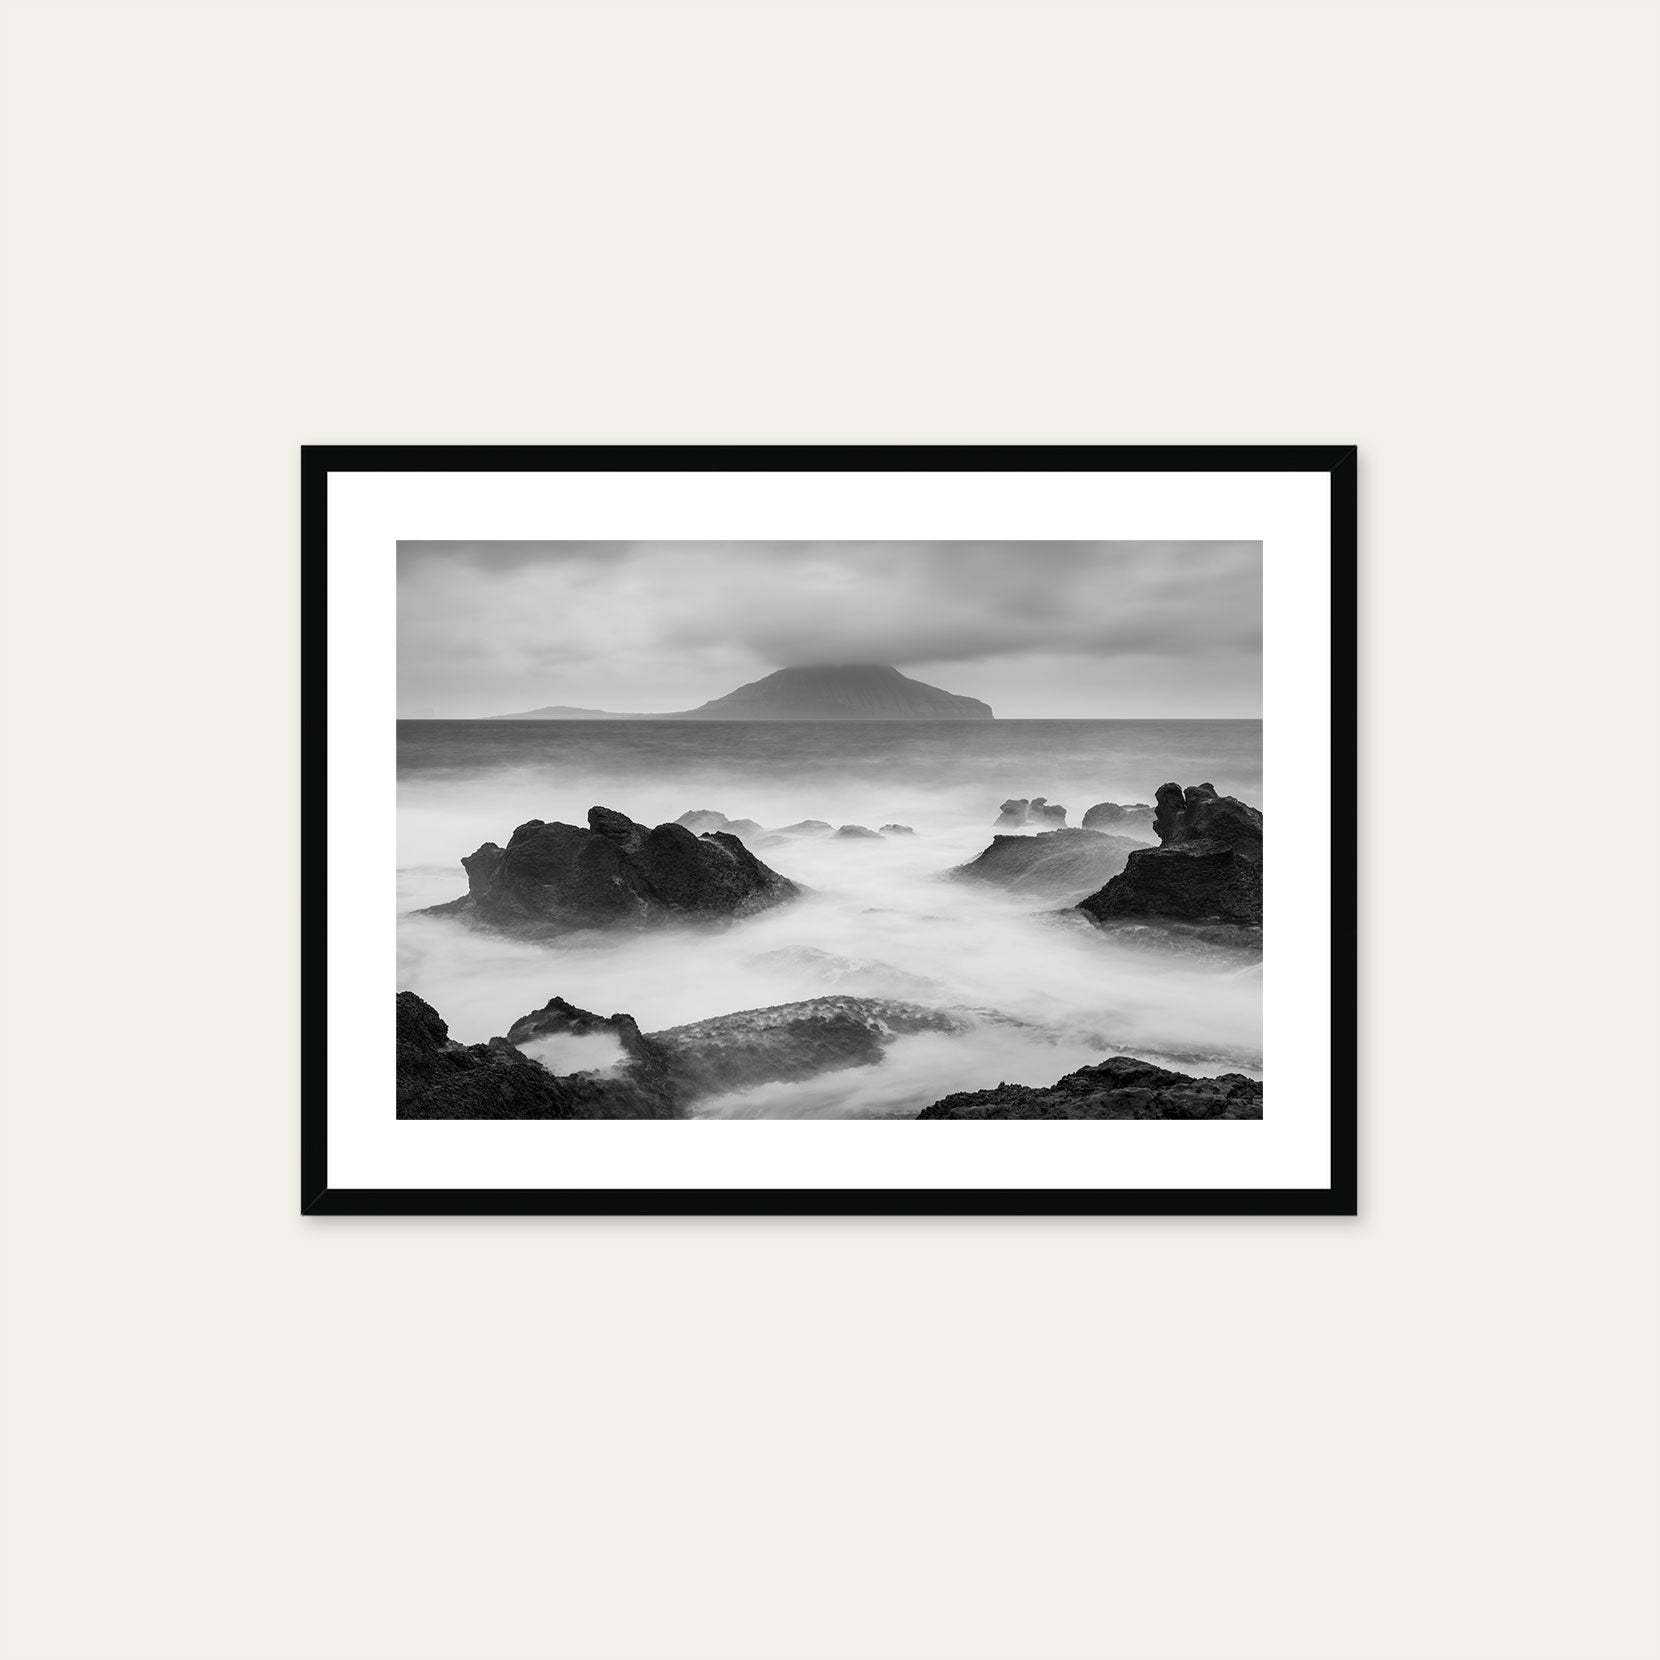 A black framed print of a rugged shoreline on the Faroe Islands